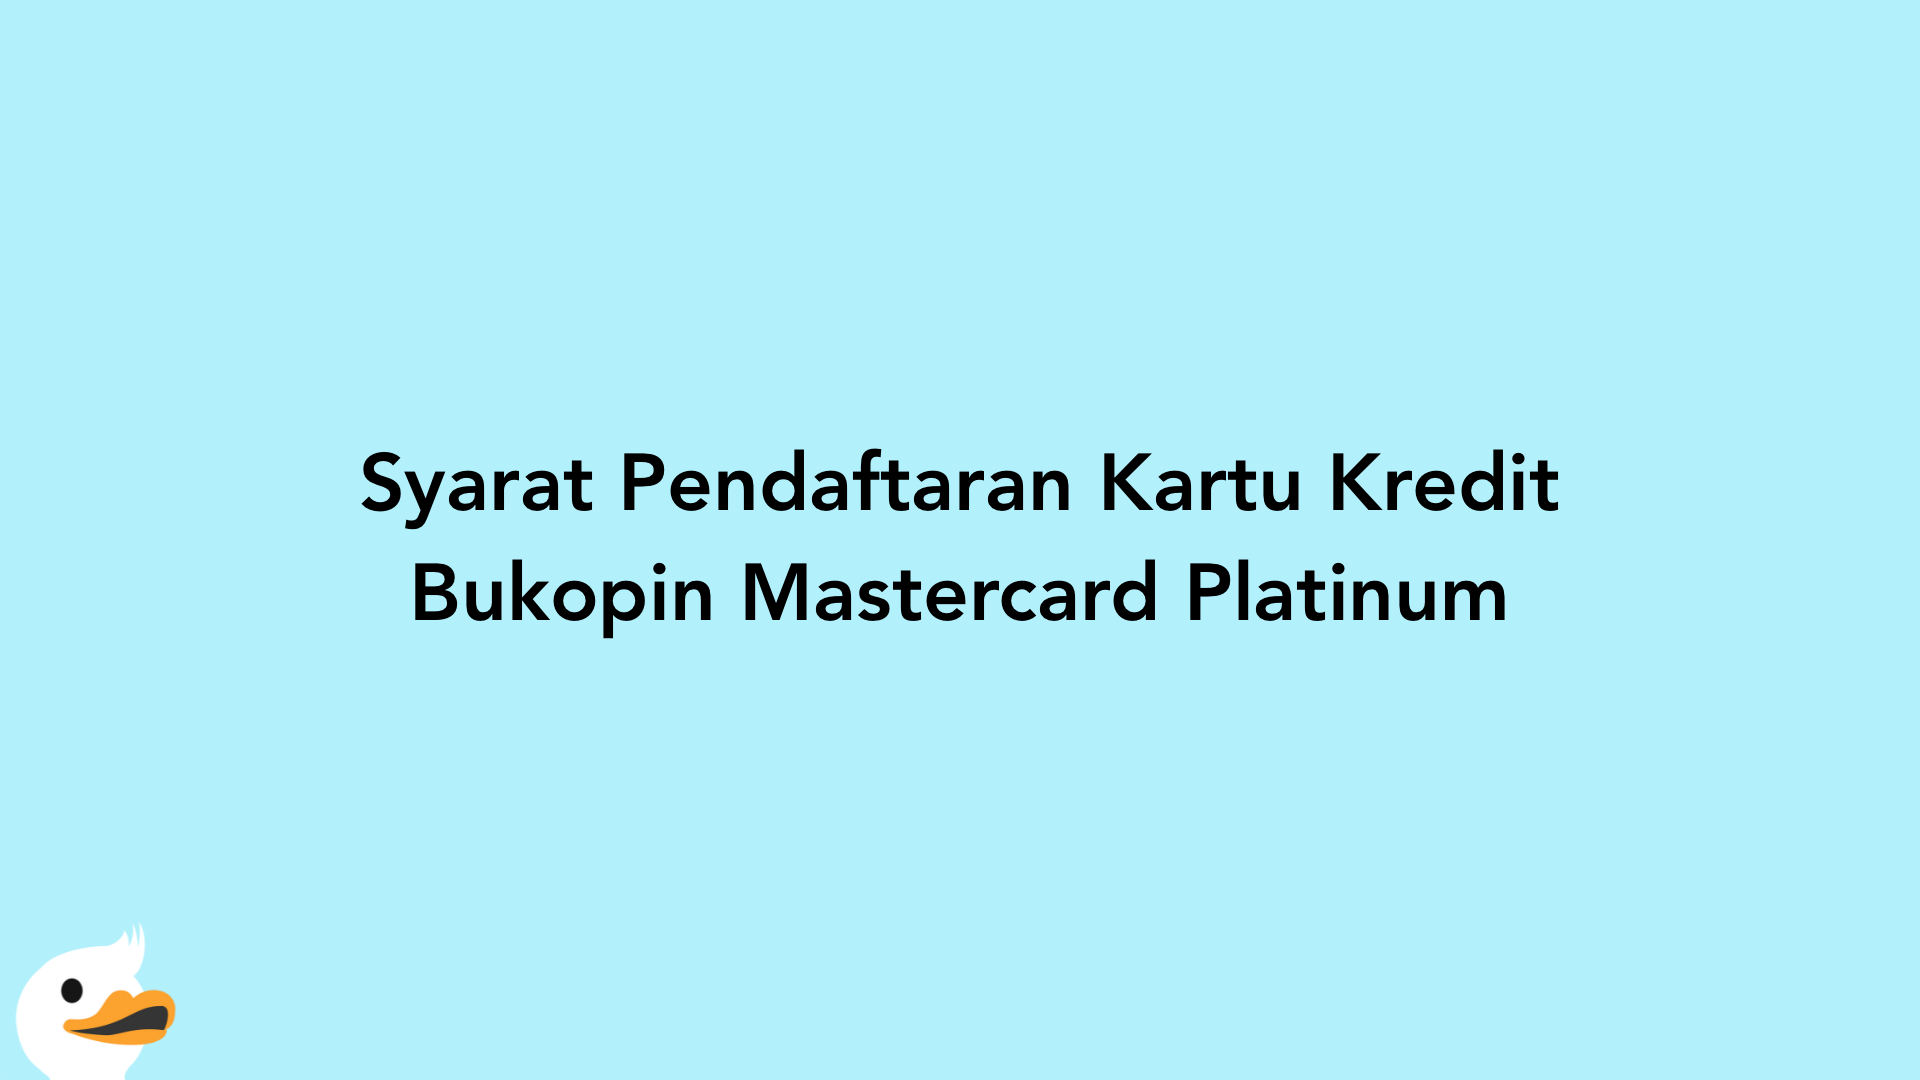 Syarat Pendaftaran Kartu Kredit Bukopin Mastercard Platinum